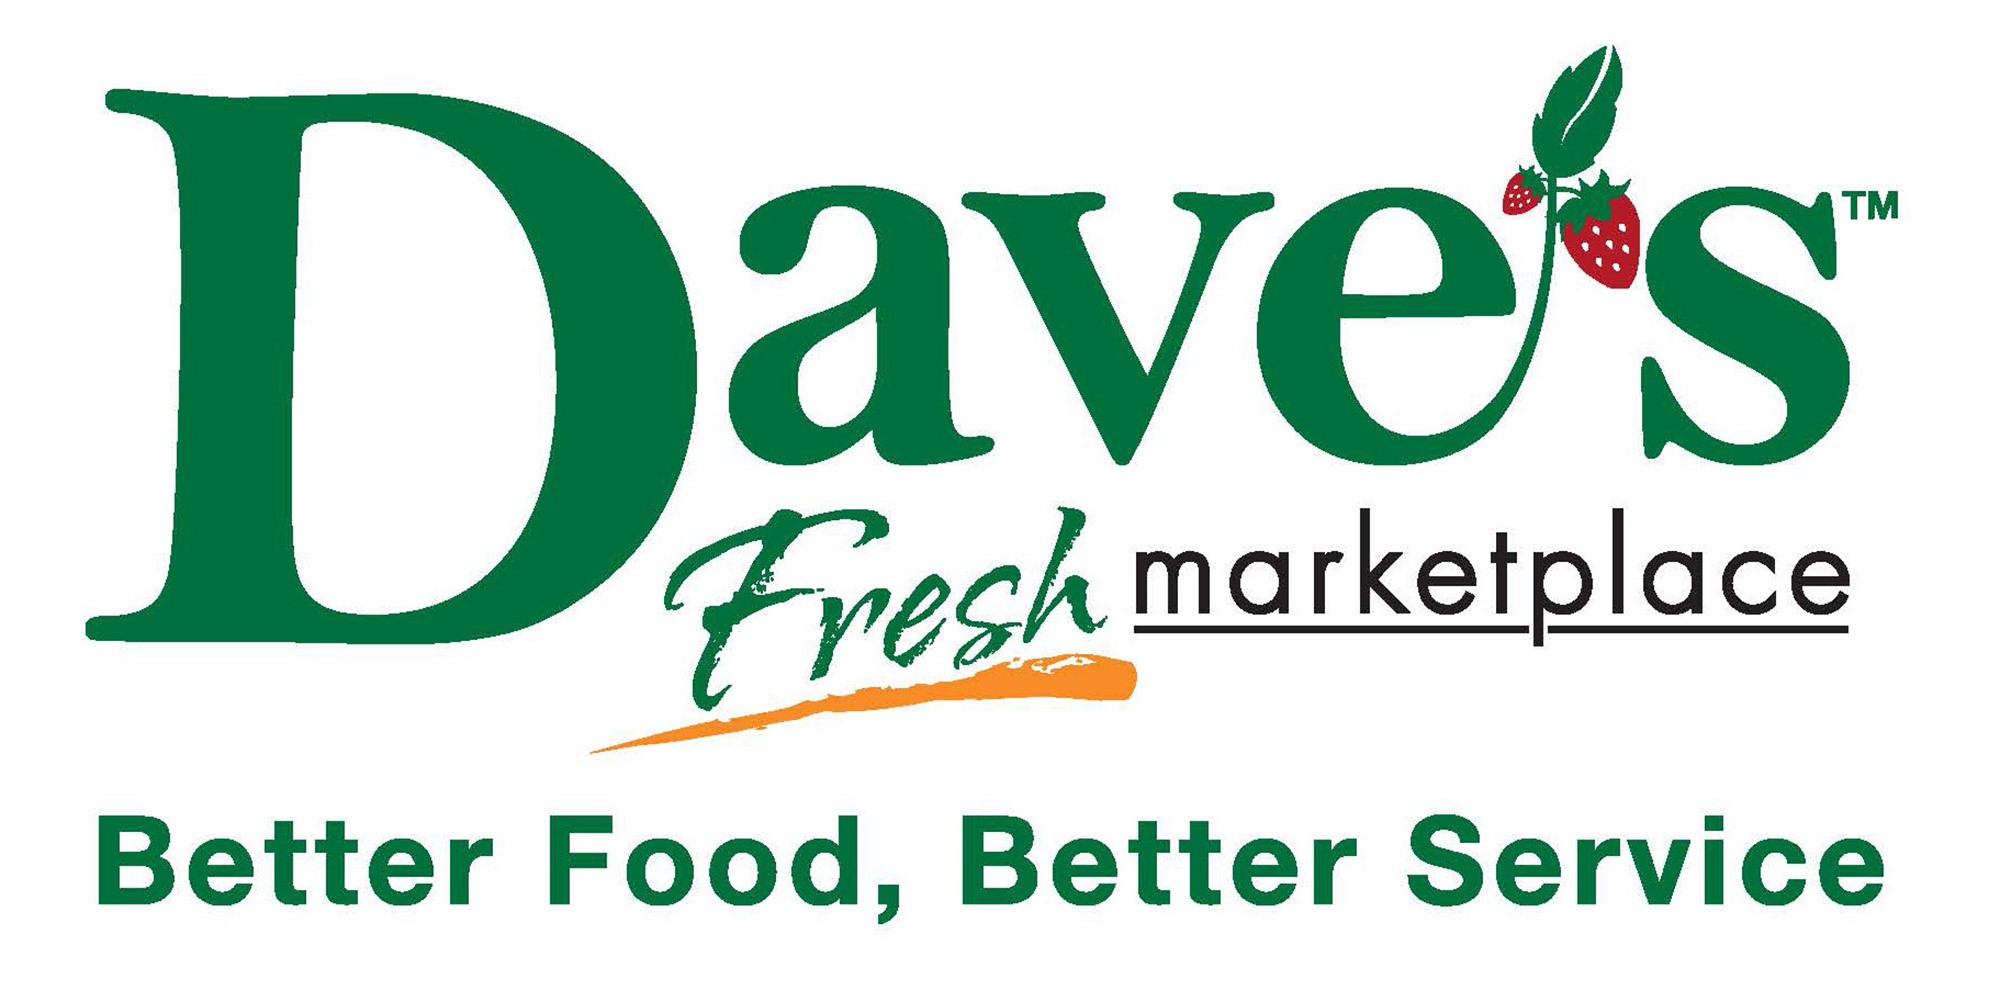 Dave's Marketplace Logo